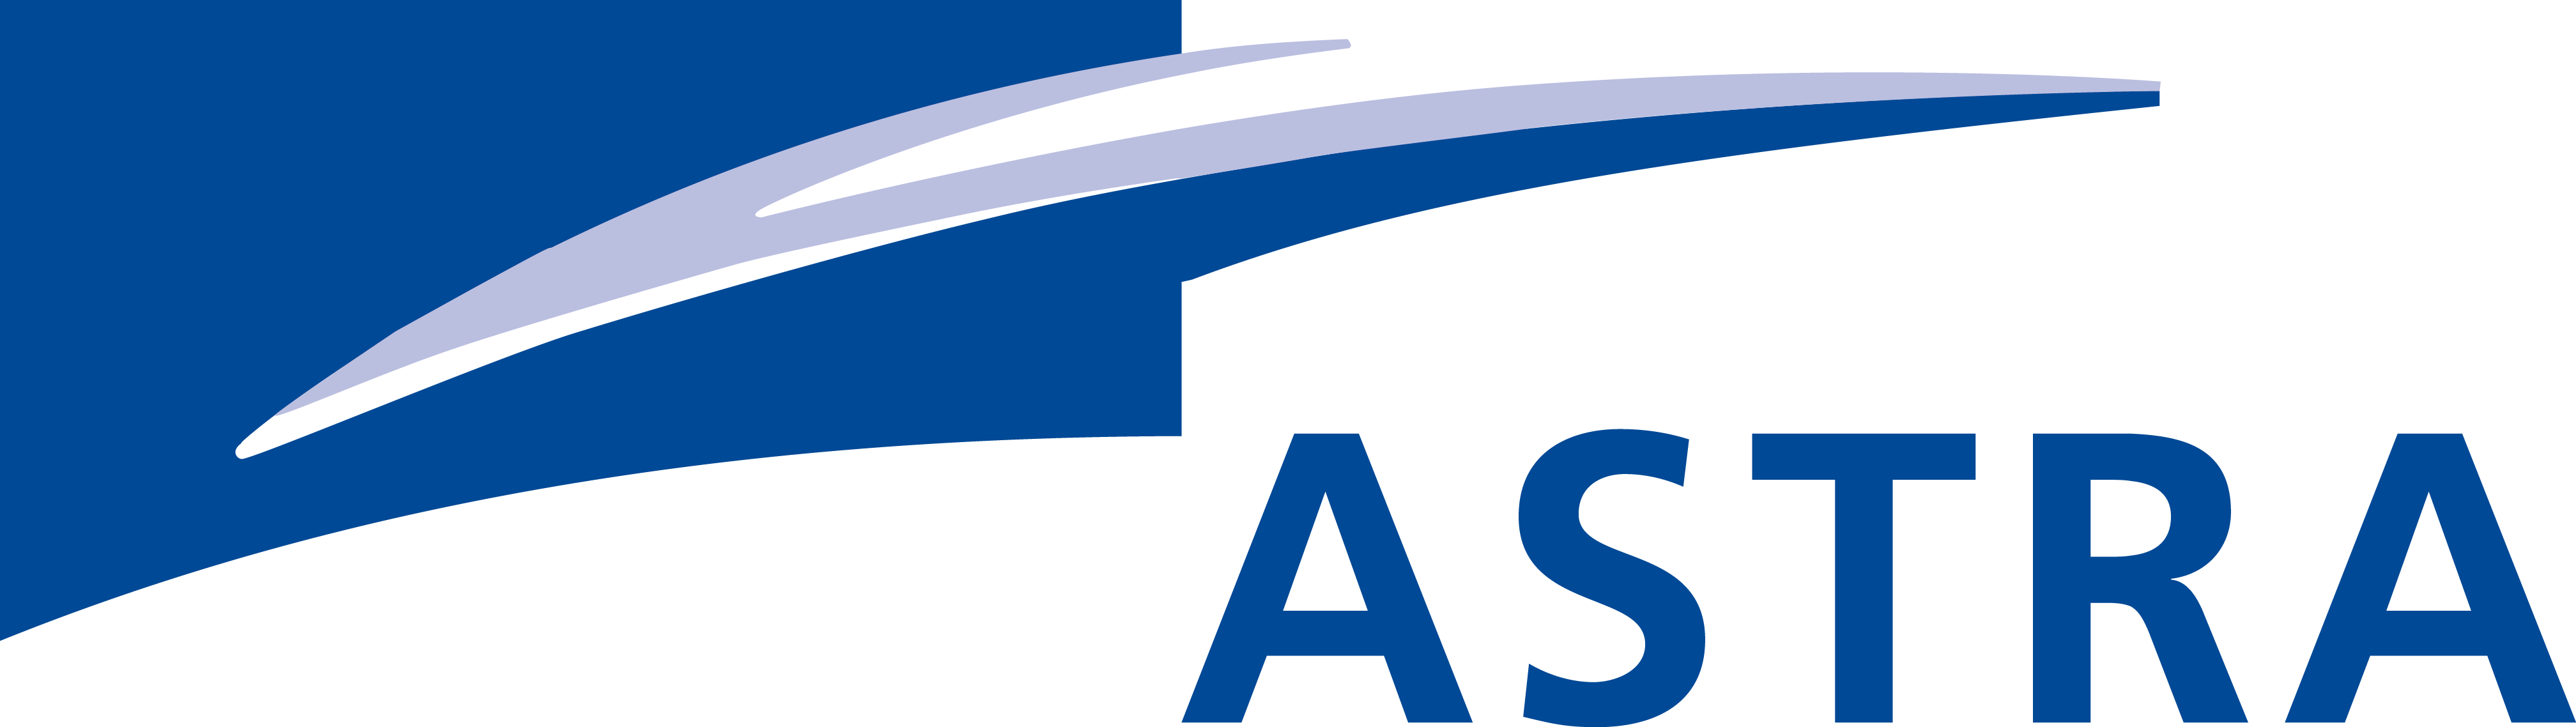 Astra International Brand Logo